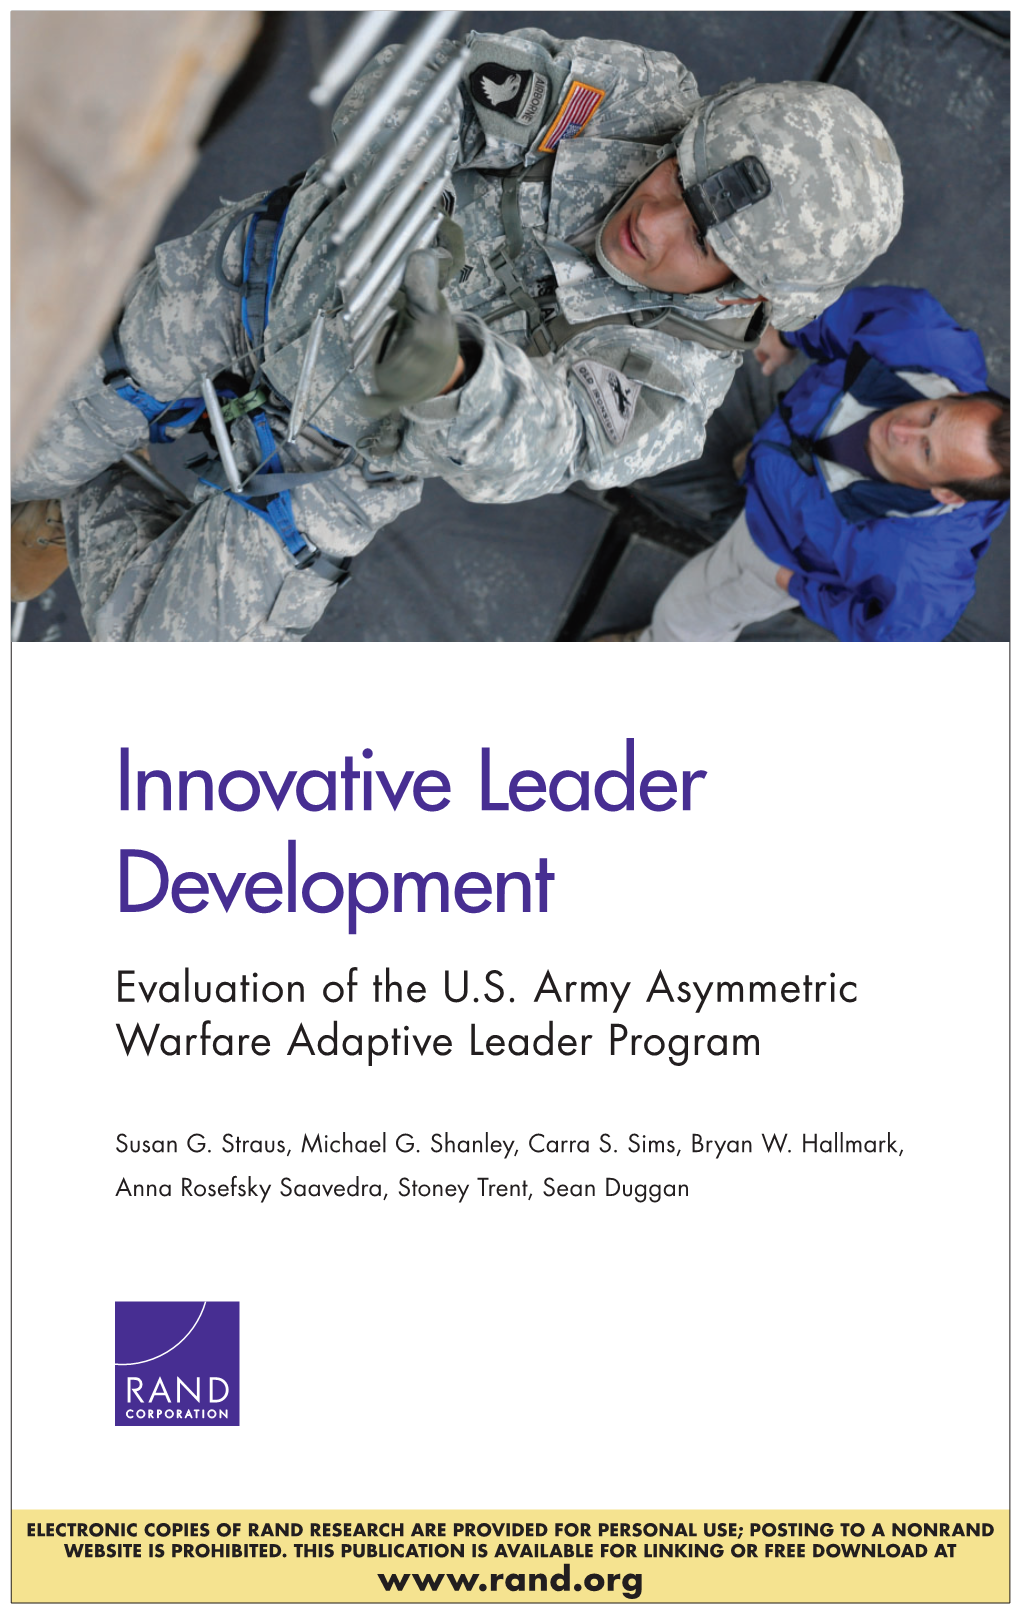 Evaluation of the US Army Asymmetric Warfare Adaptive Leader Program